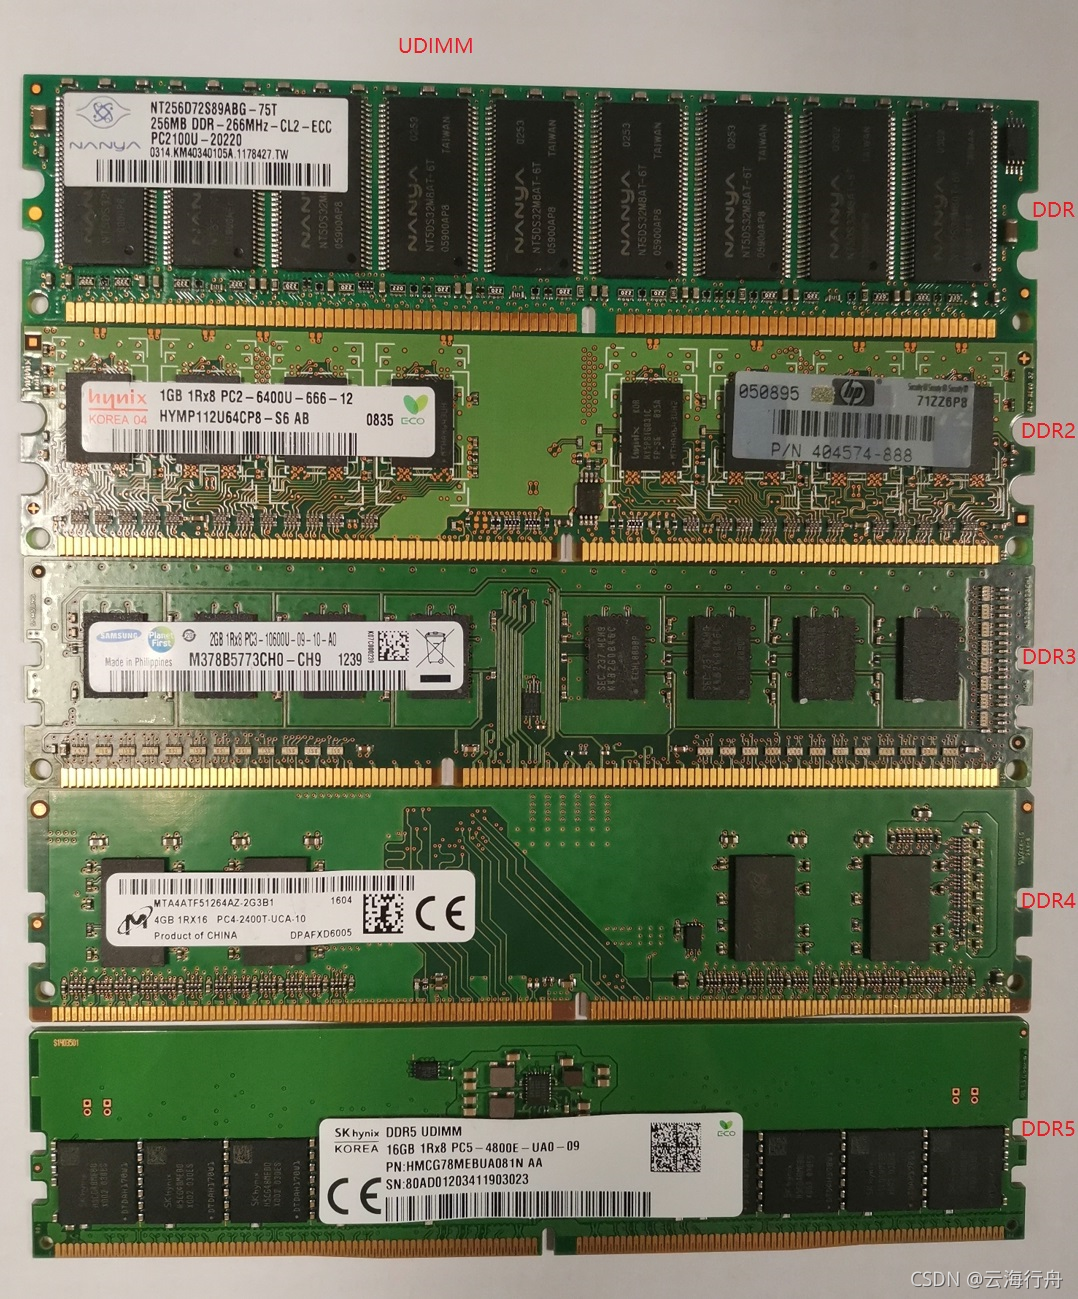 B365 主板是否支持 DDR3 内存？深入研究揭秘其神秘面纱  第5张